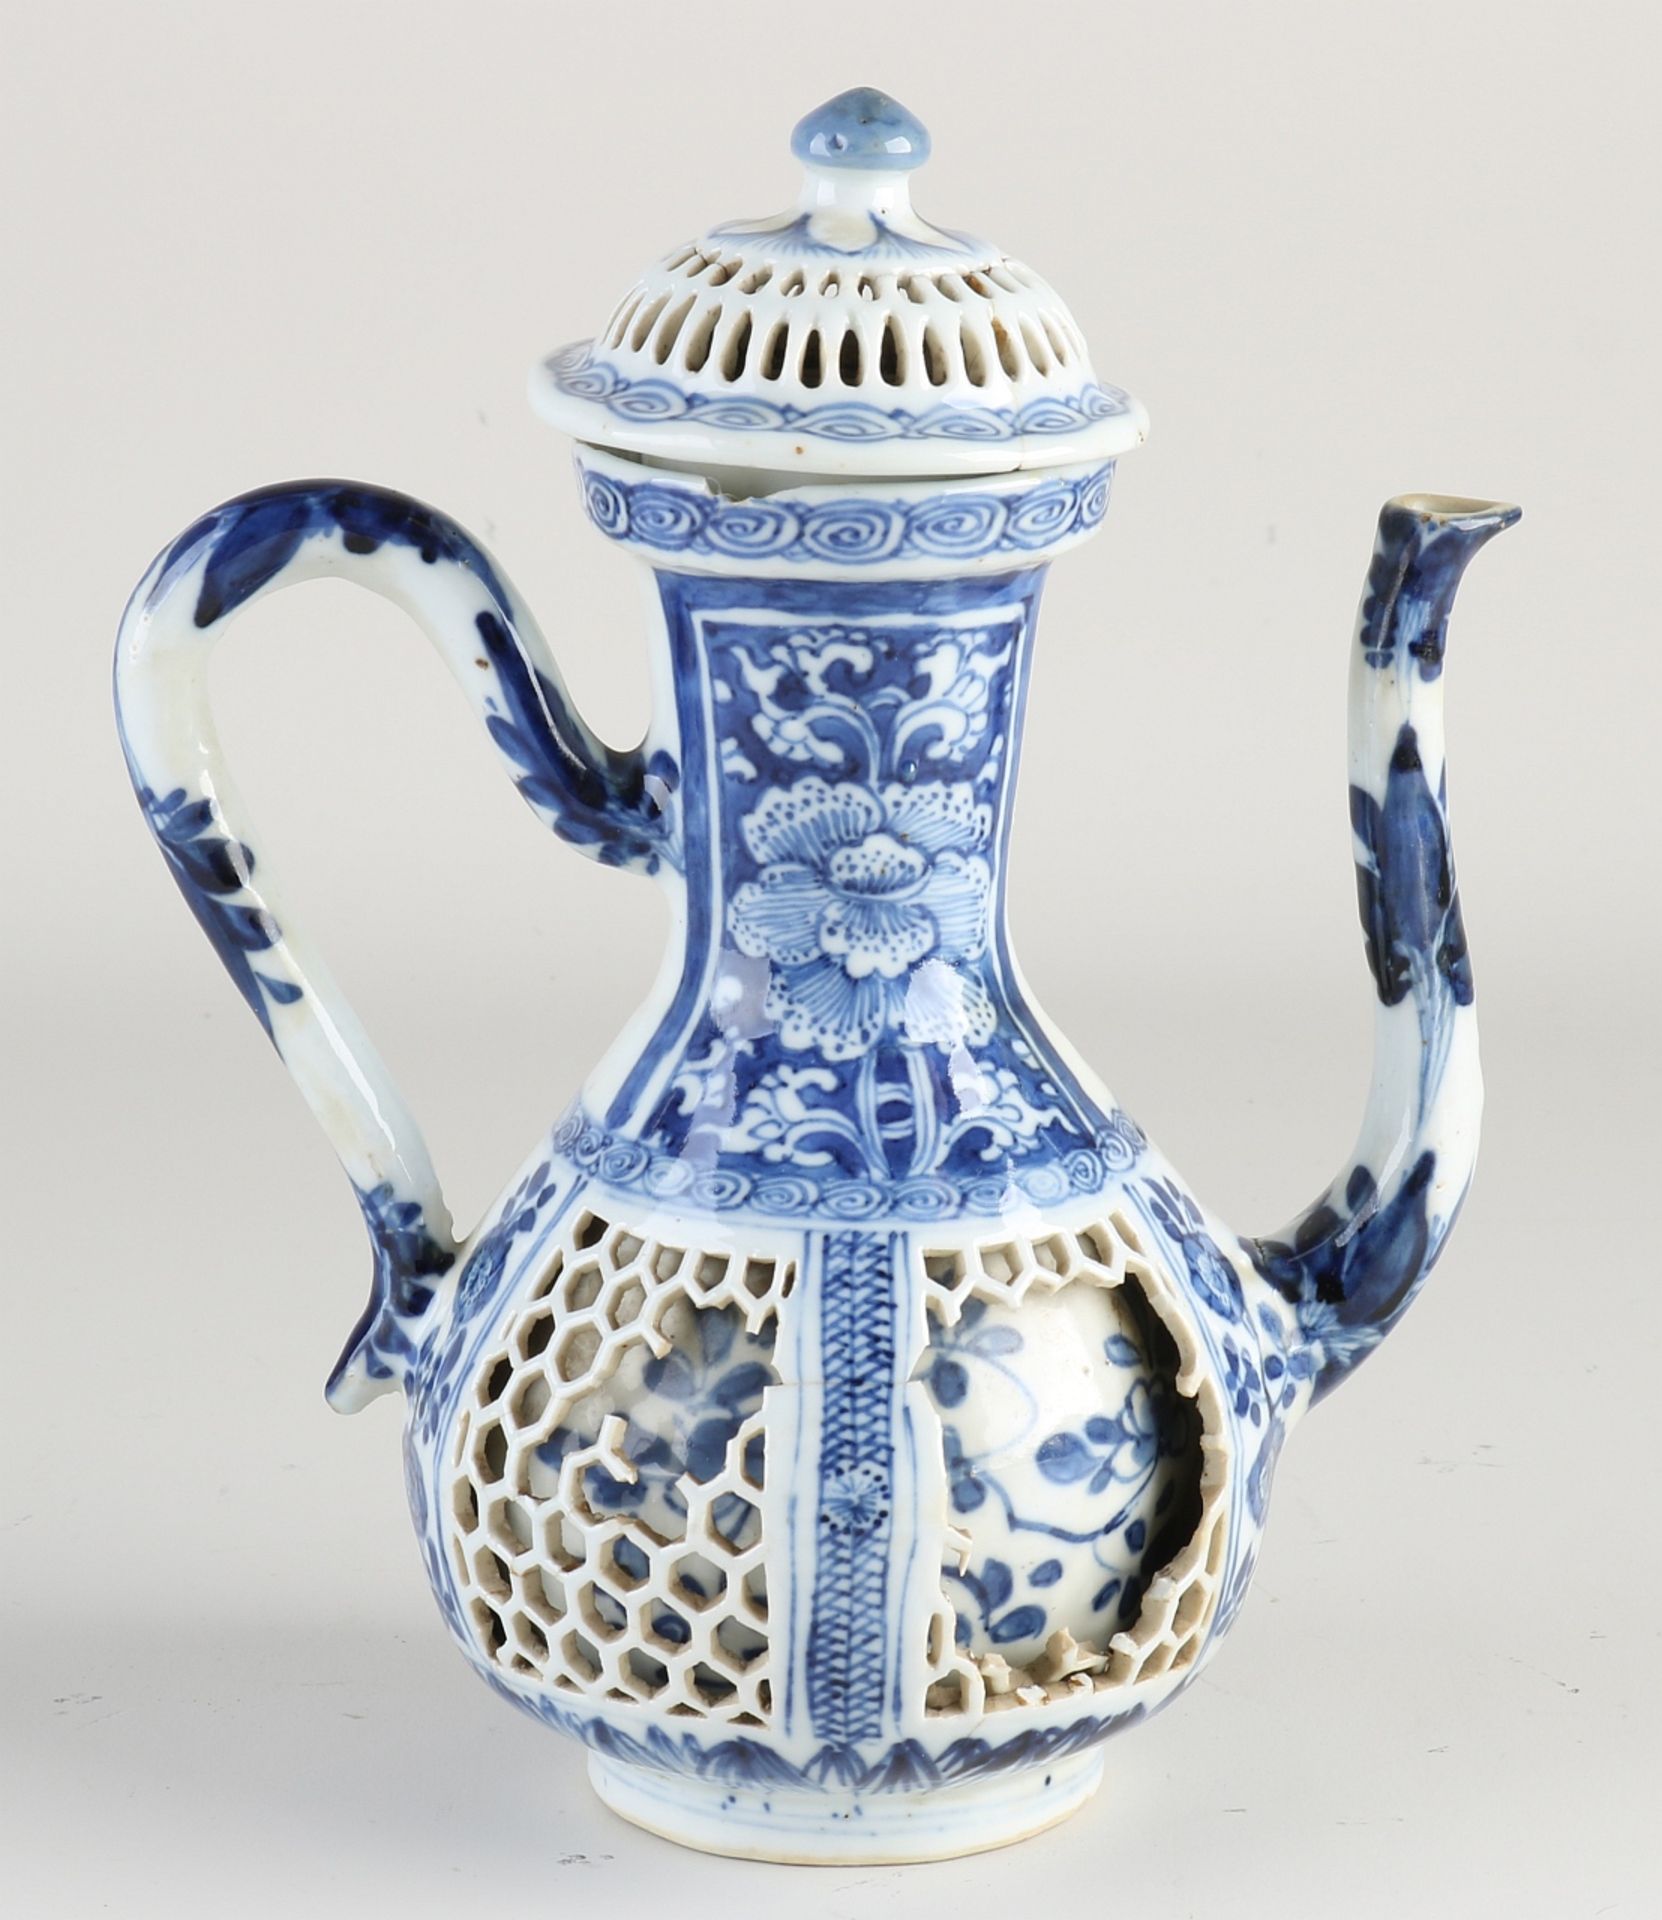 Rare 17th century Chinese jug